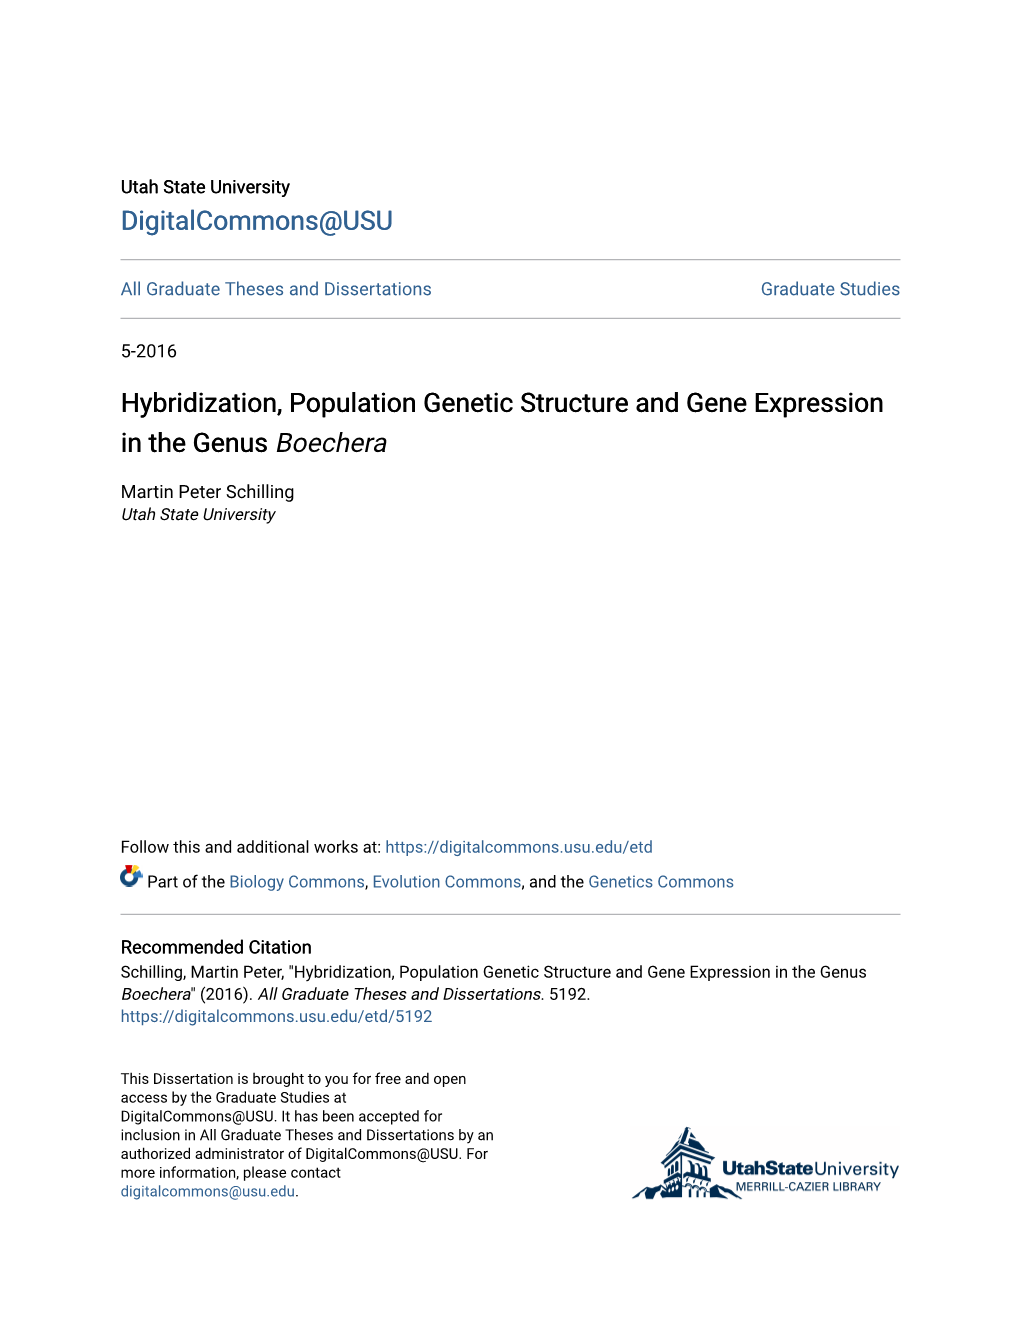 Hybridization, Population Genetic Structure and Gene Expression in the Genus Boechera